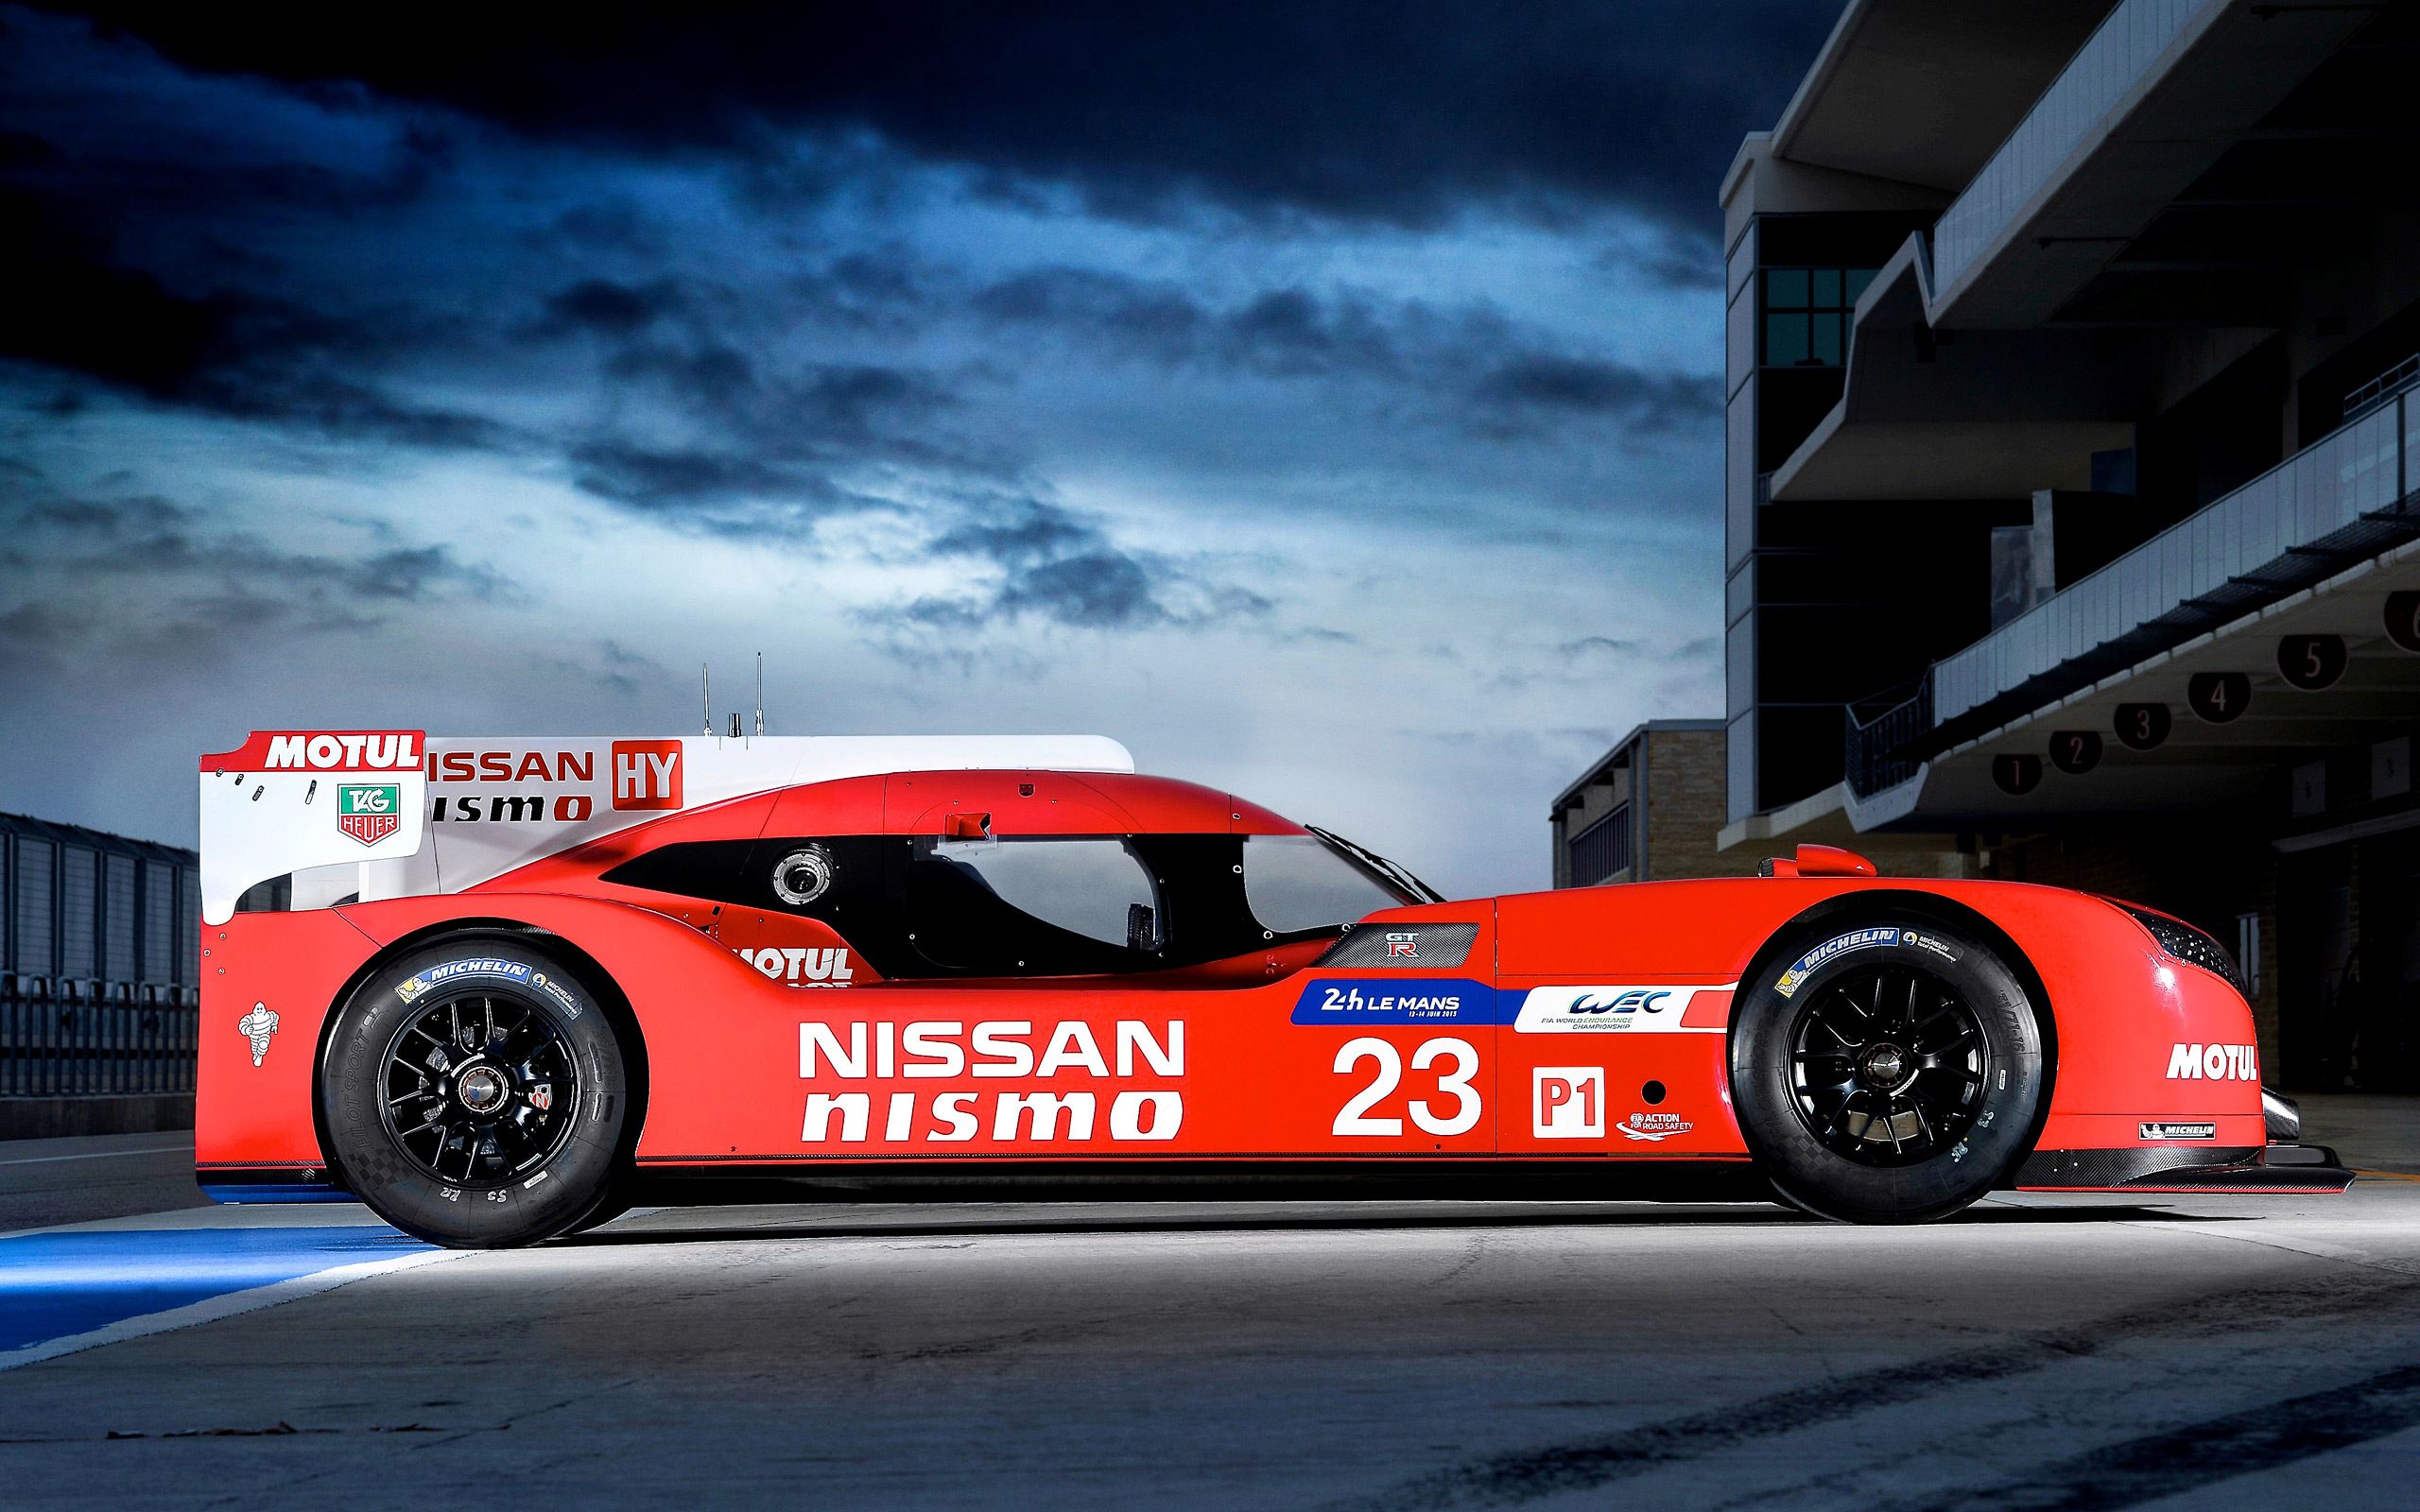  2015 Nissan GT-R LM Nismo Wallpaper.